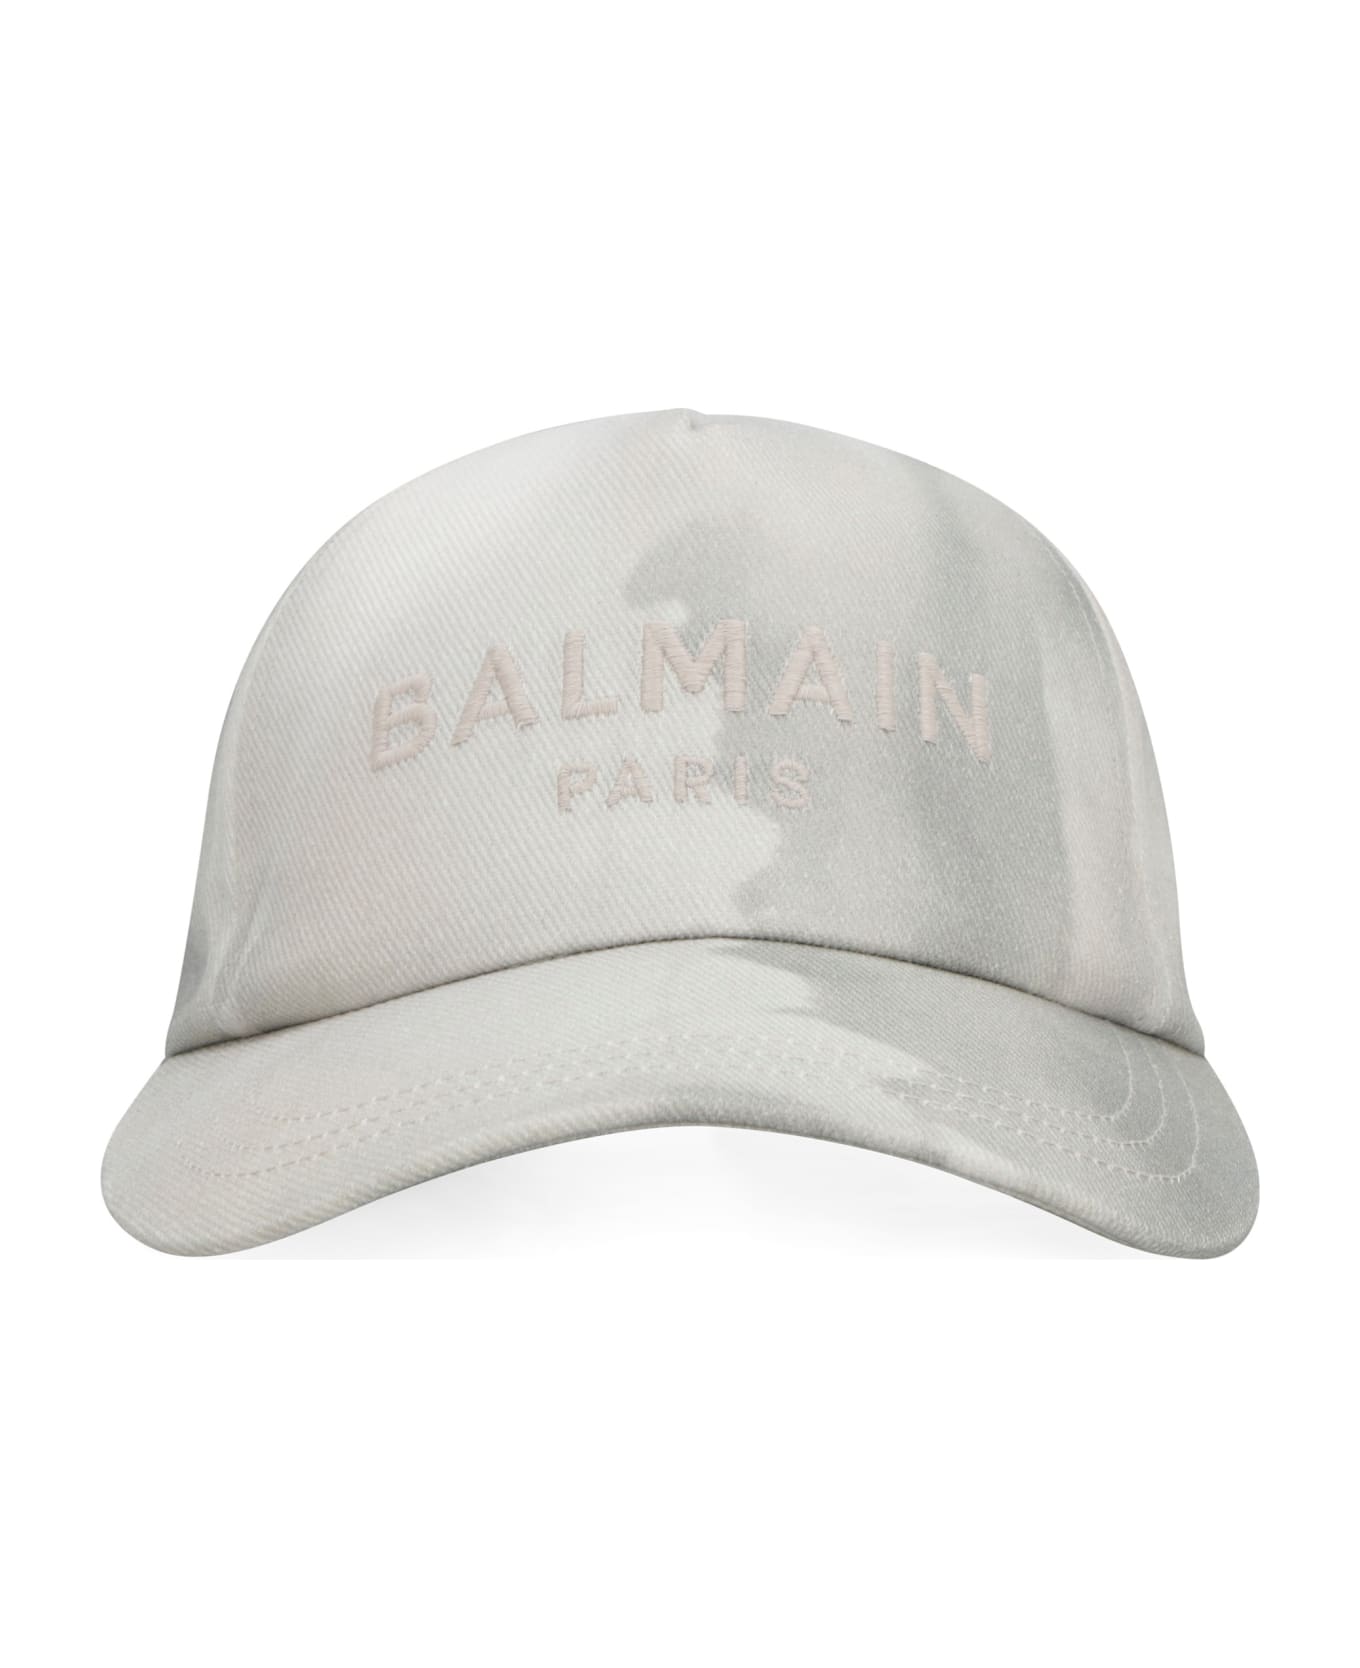 Balmain Logo Baseball Cap - grey